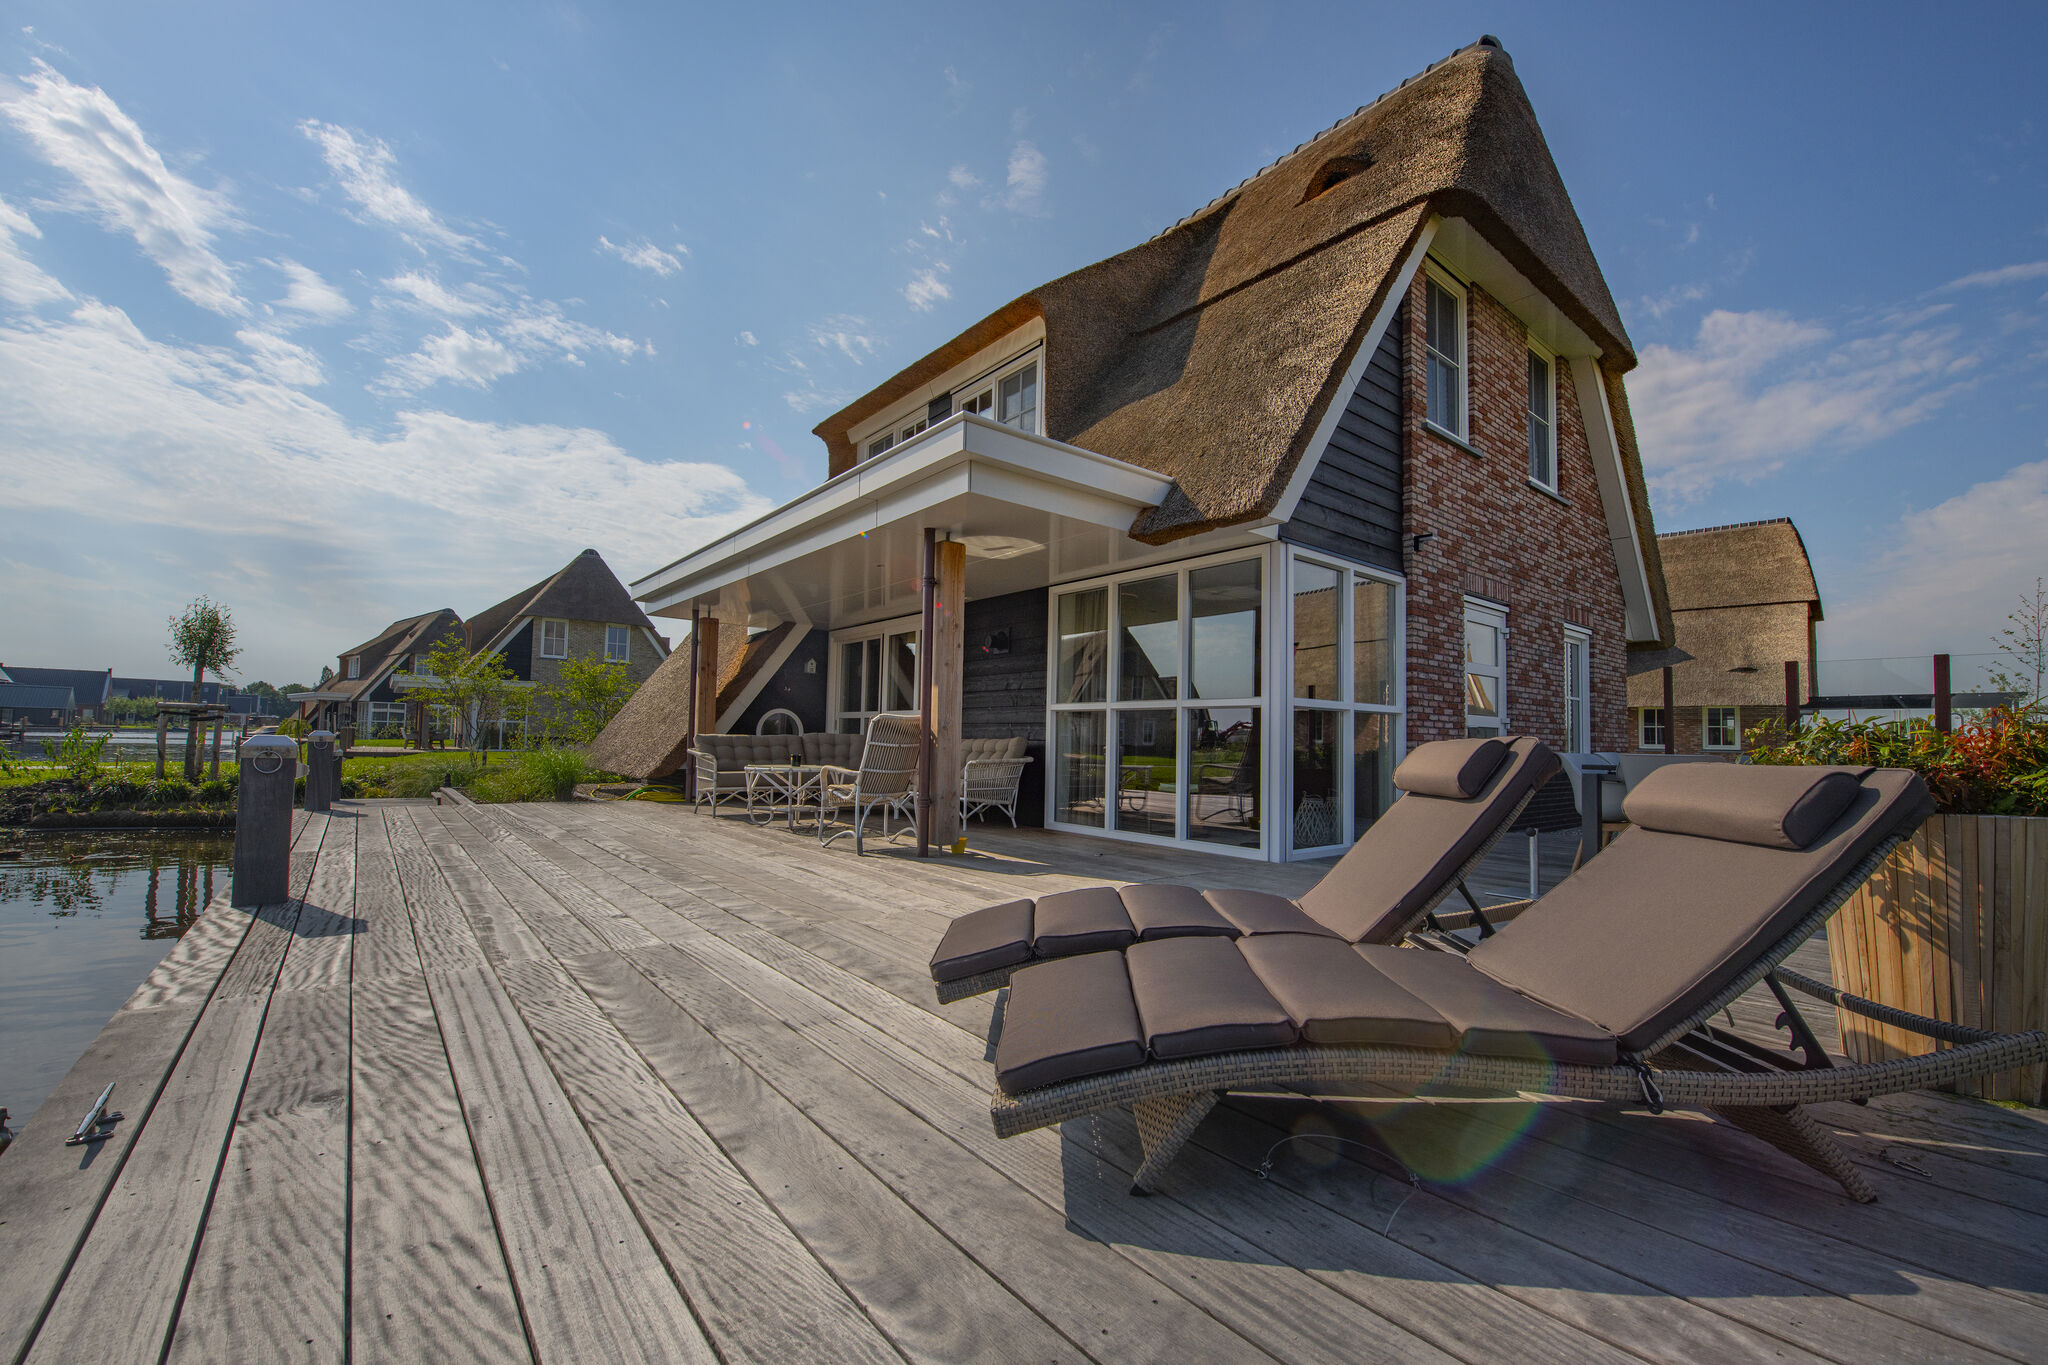 Villa with sunshower at Tjeukemeer